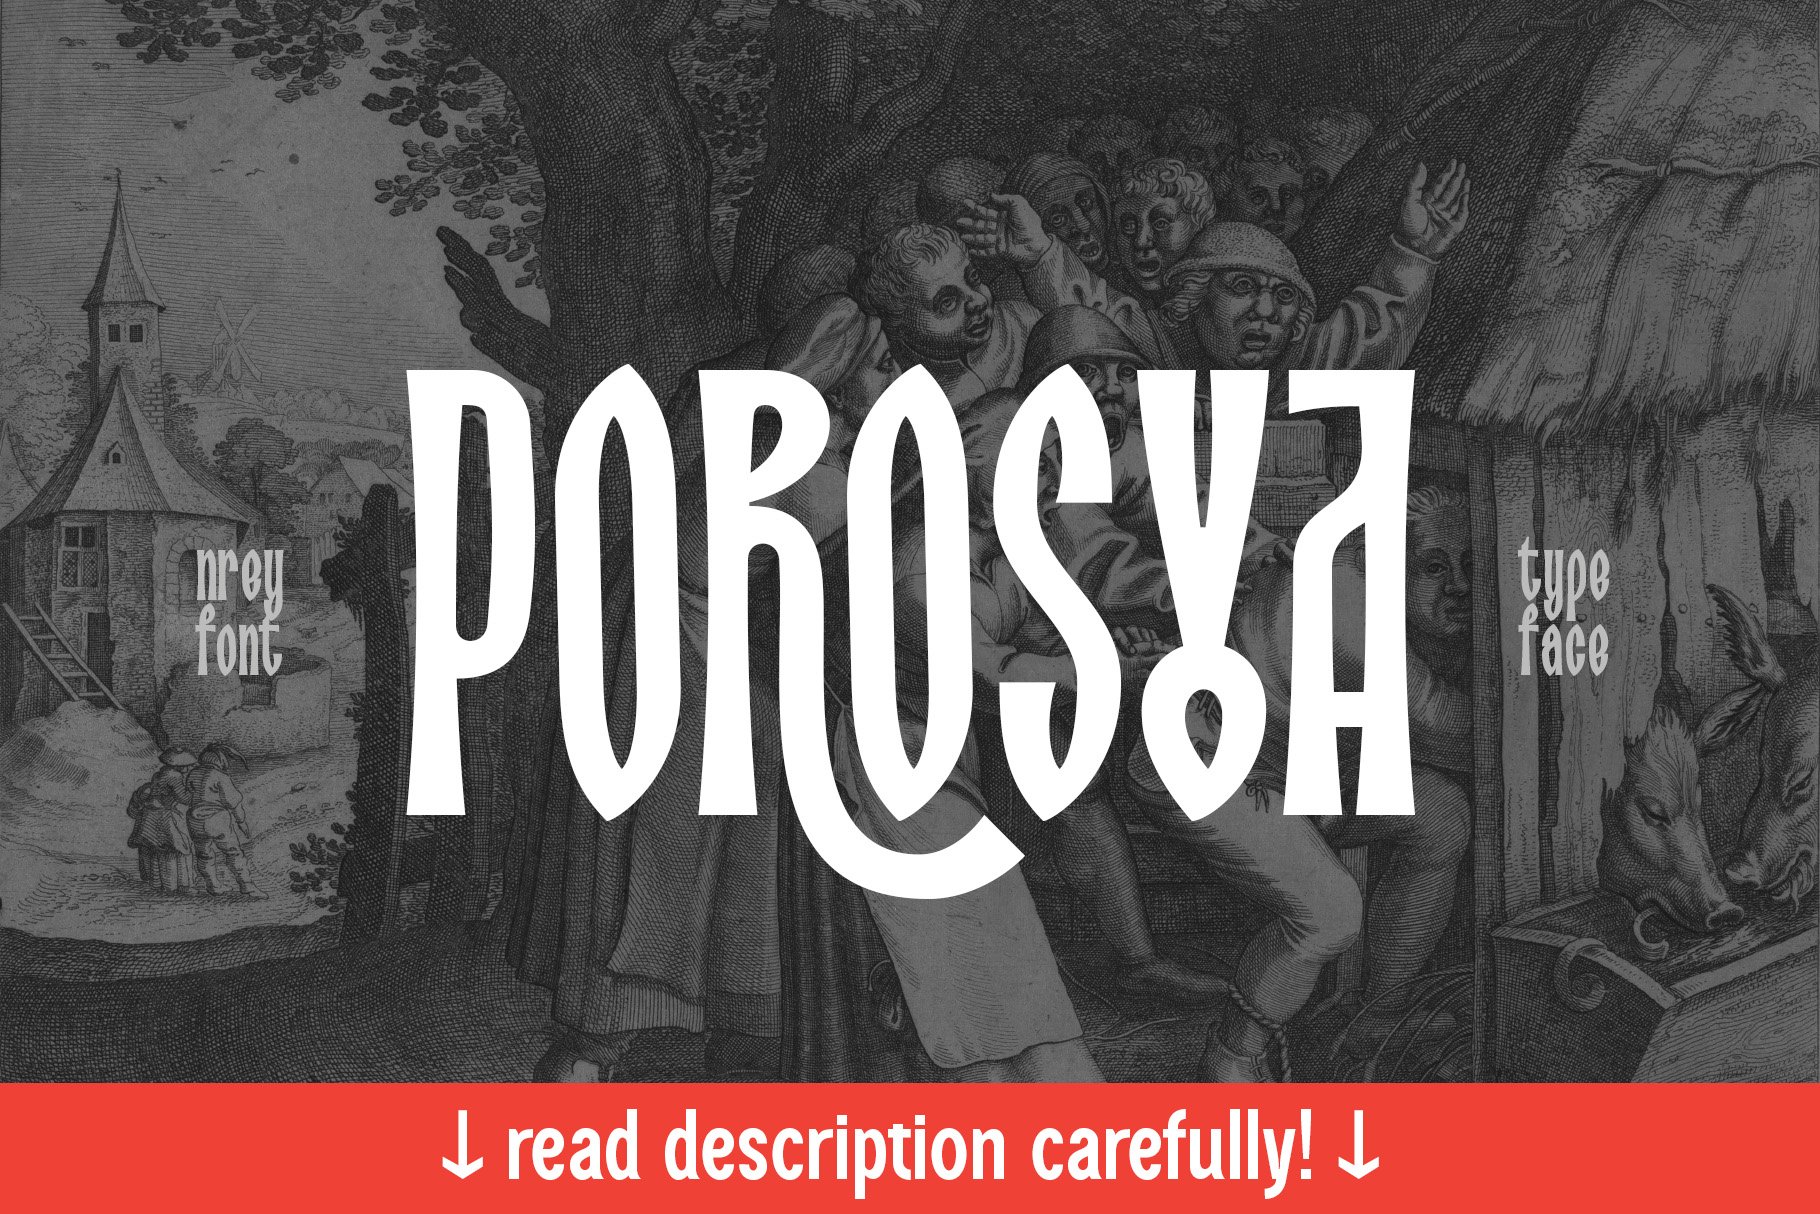 Porosya cover image.